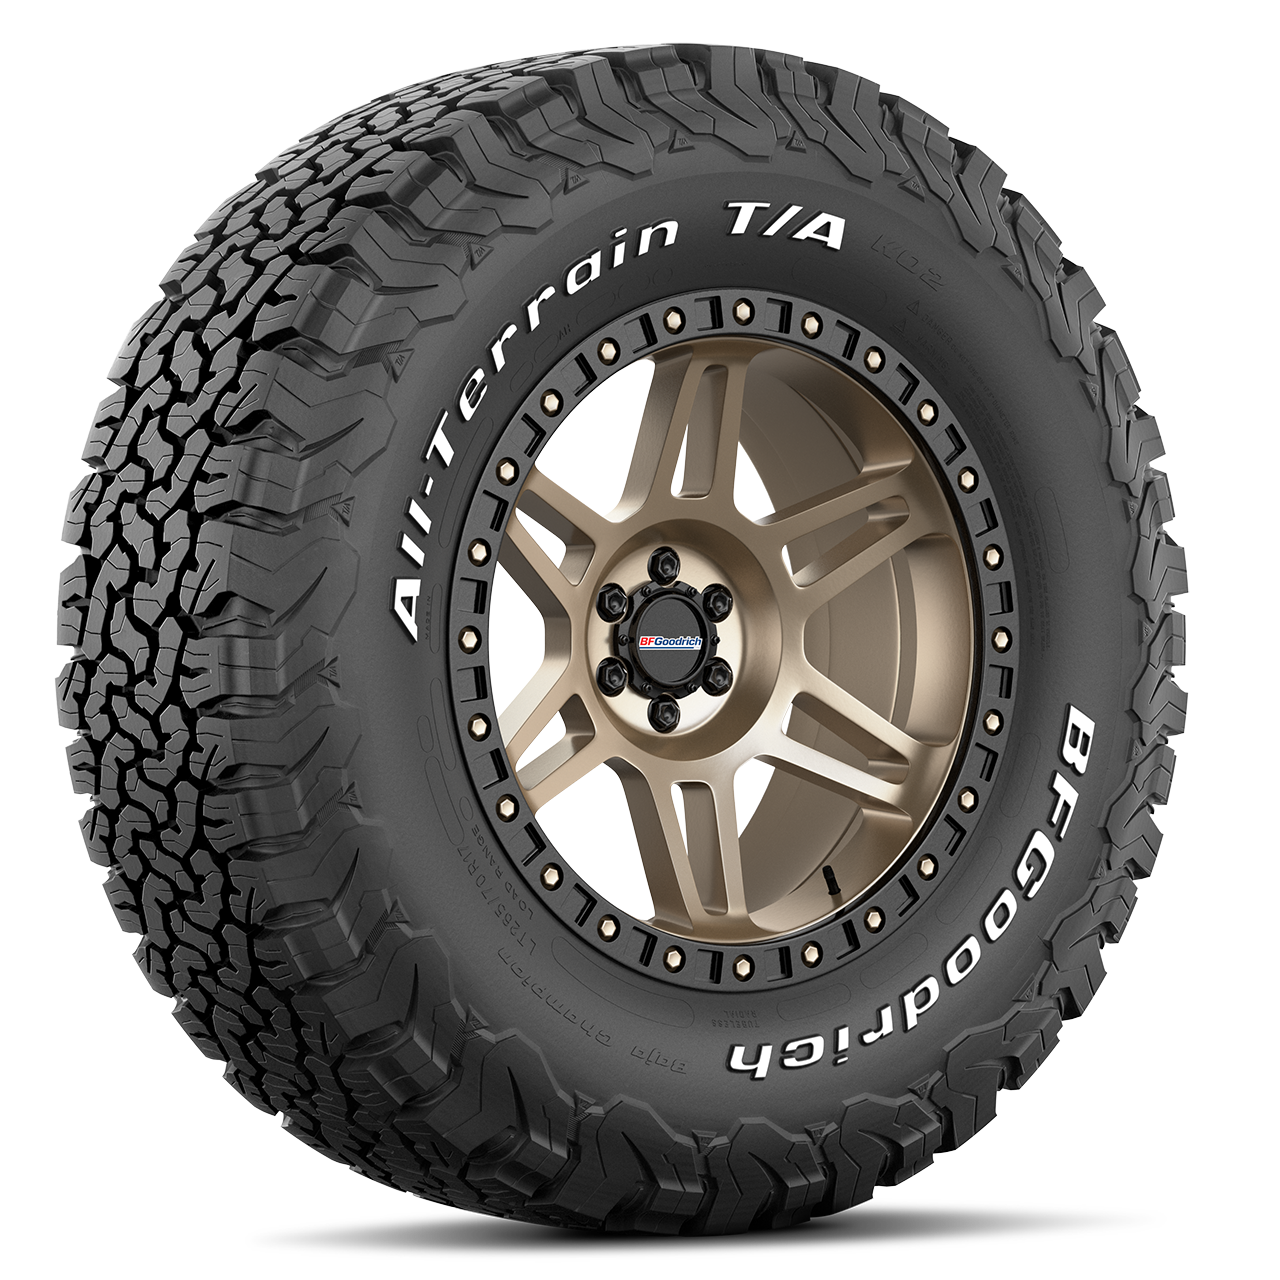 BFGOODRICH ALL-TERRAIN T/A KO2 LRE RWL LT 225/75 R16 115/112S TL - Ultra  High Performance Tyres Kenya